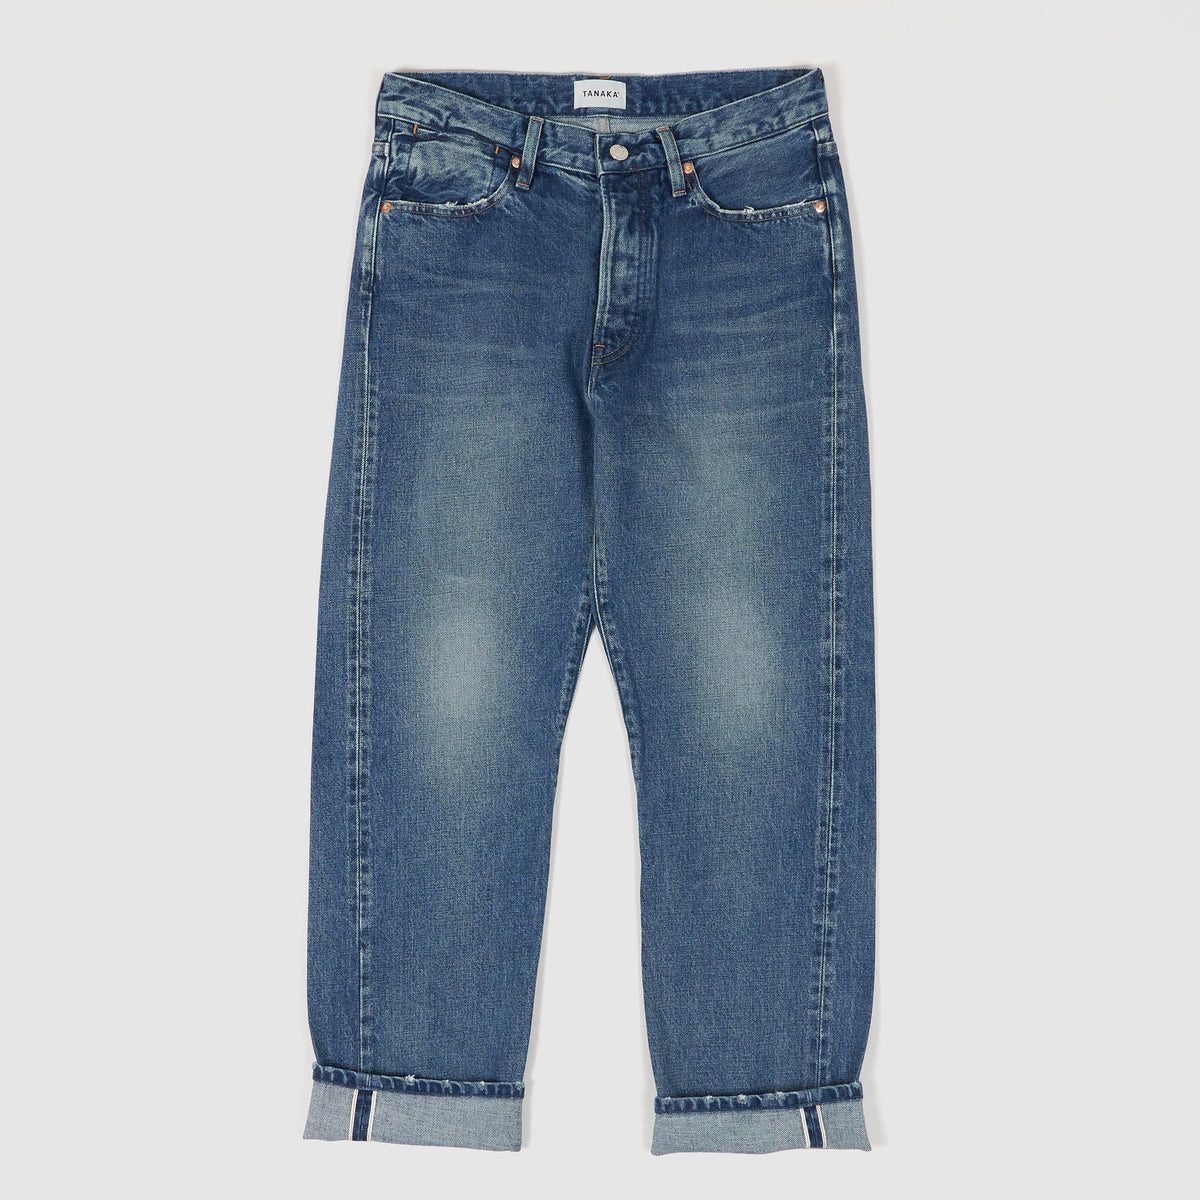 Tanaka NY TYO Ladies The Straight Jeans 5-Pocket Selvage Stone Washed